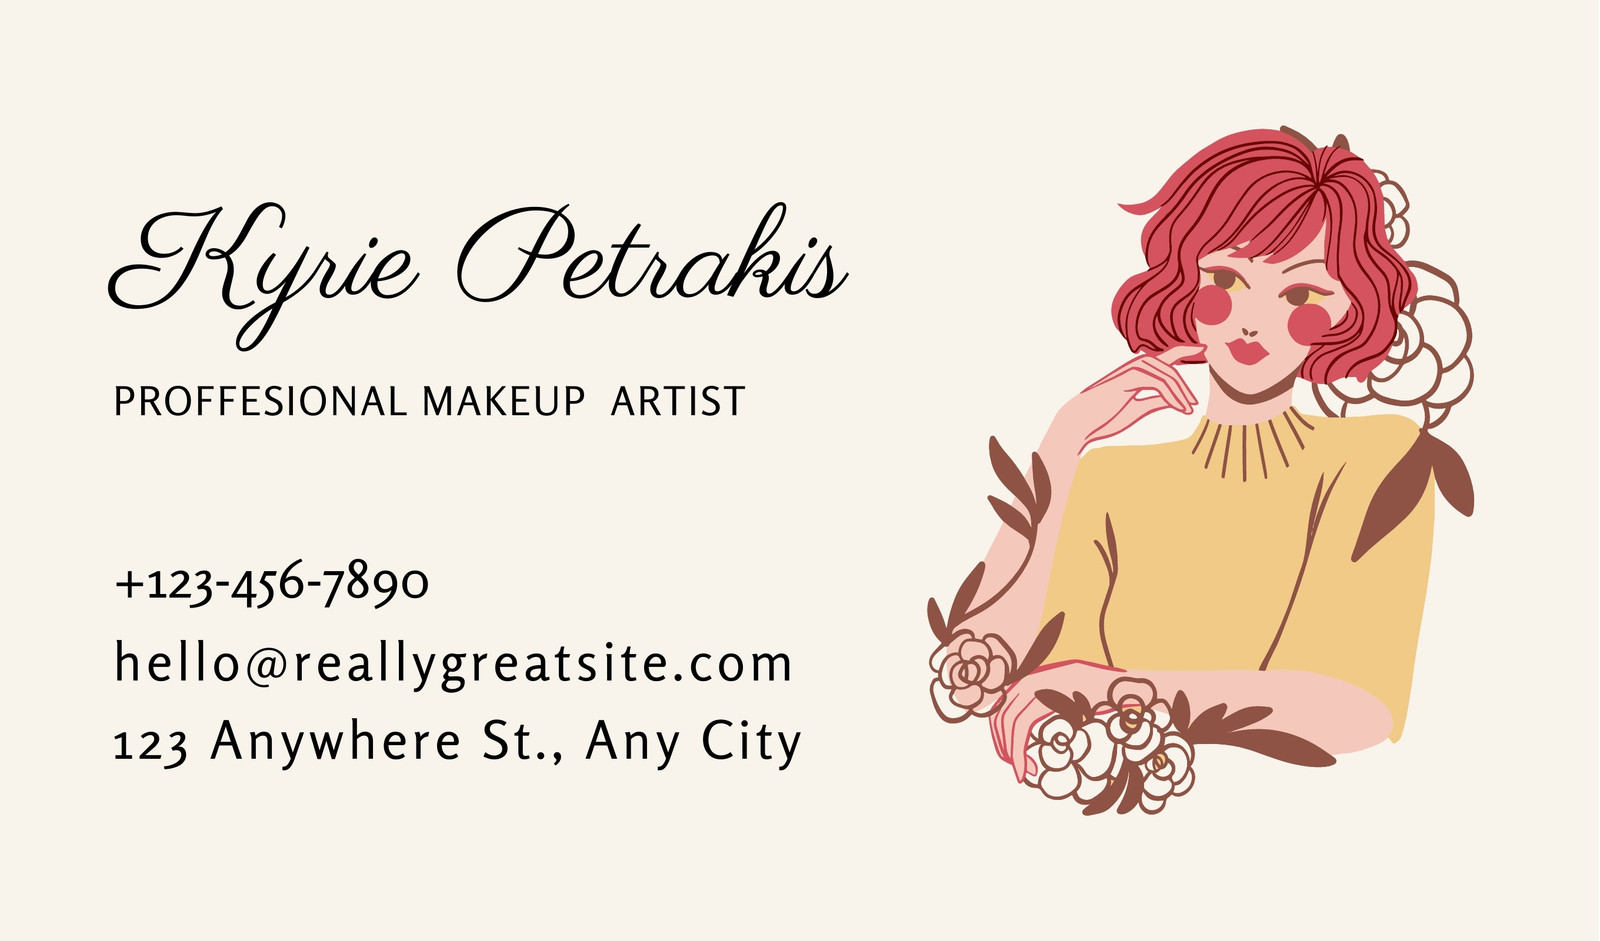 Free, custom printable makeup artist business card templates | Canva